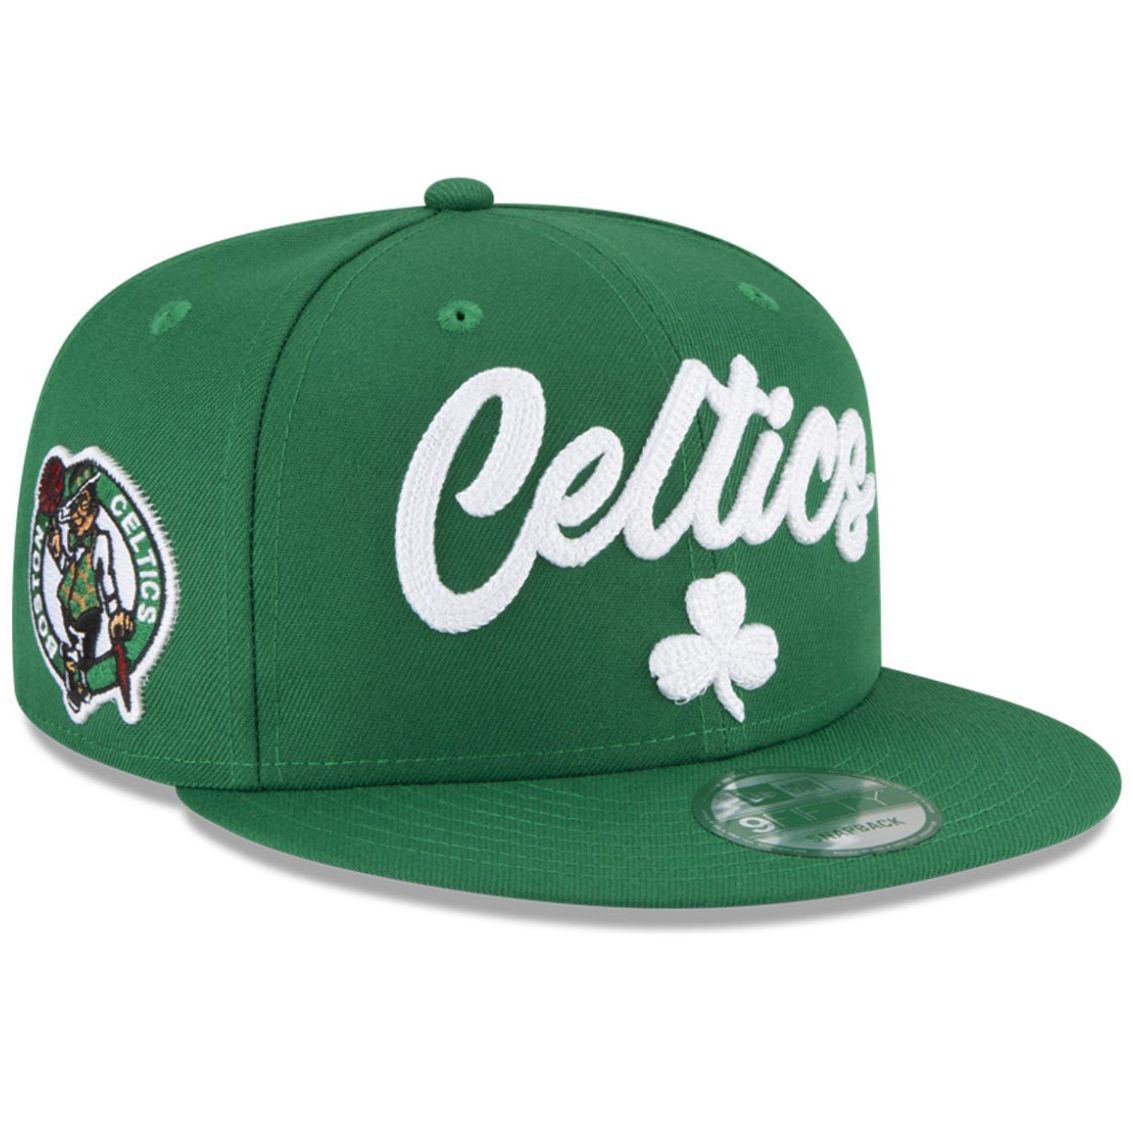 Gorra 950 Nba Draft Boston Celtics  para Caballero